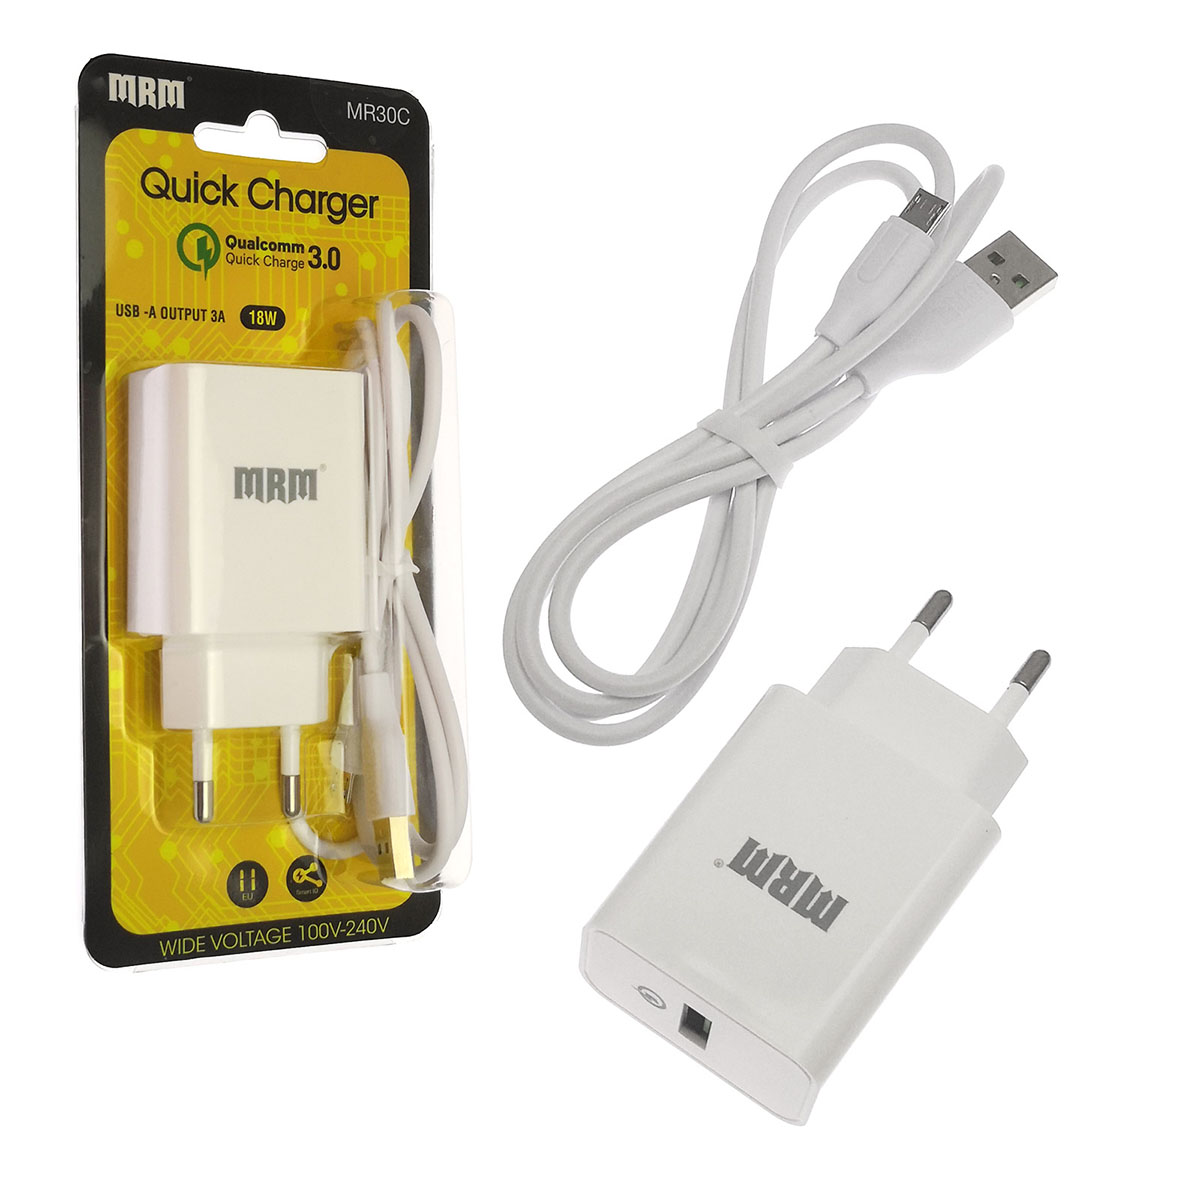 СЗУ (Сетевое зарядное устройство) MRM MR30m с кабелем Micro USB, 3.1A, 1 USB, QC3.0, длина 1 метр, цвет белый